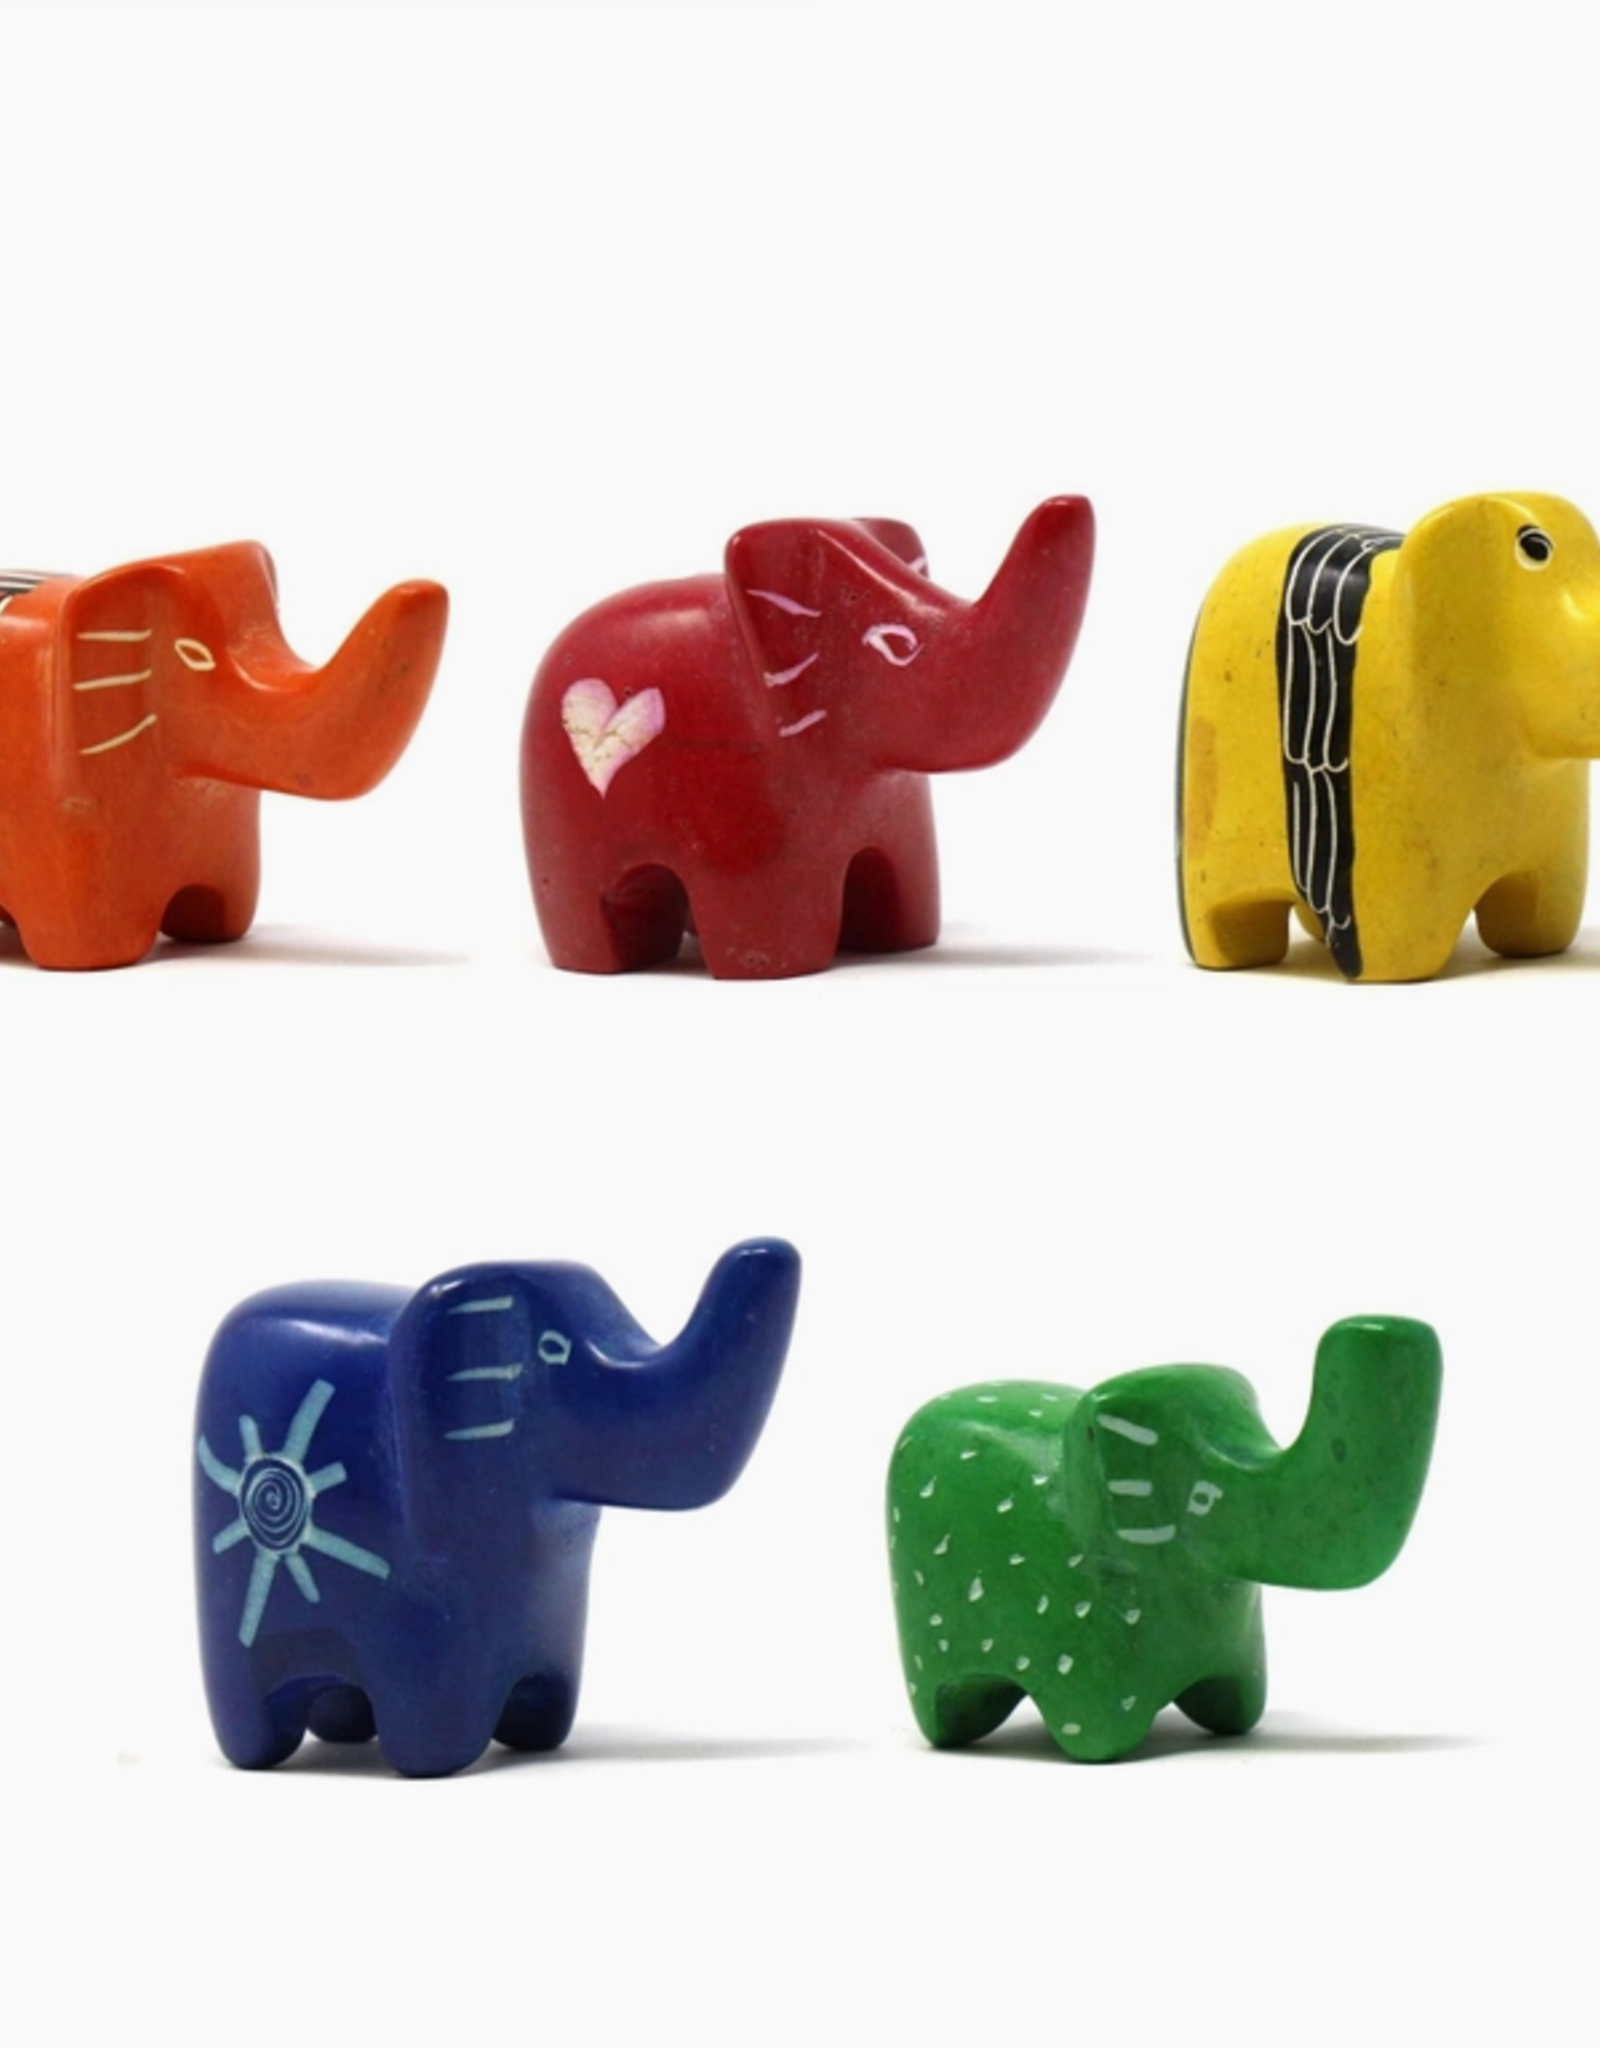 Global Crafts Soapstone Tiny Elephant - Assorted